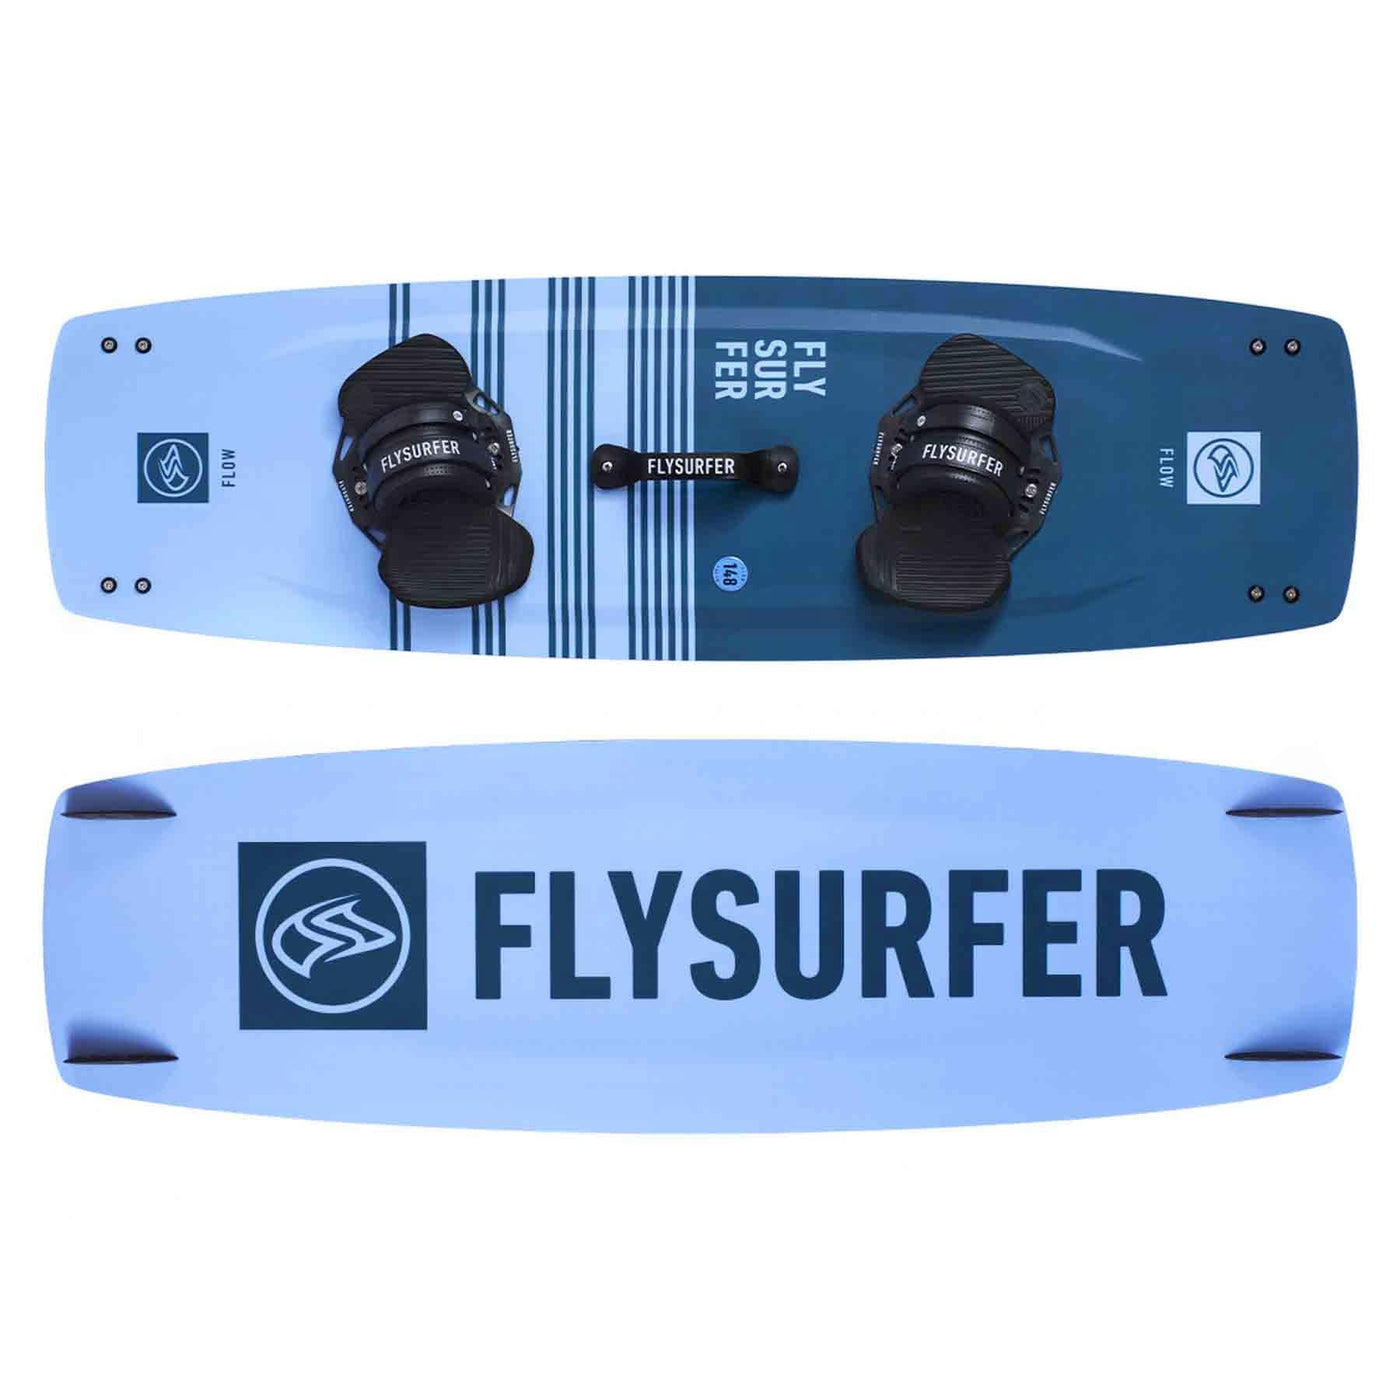 Flysurfer Flow Kiteboard with Pads And Straps FLYSURFER